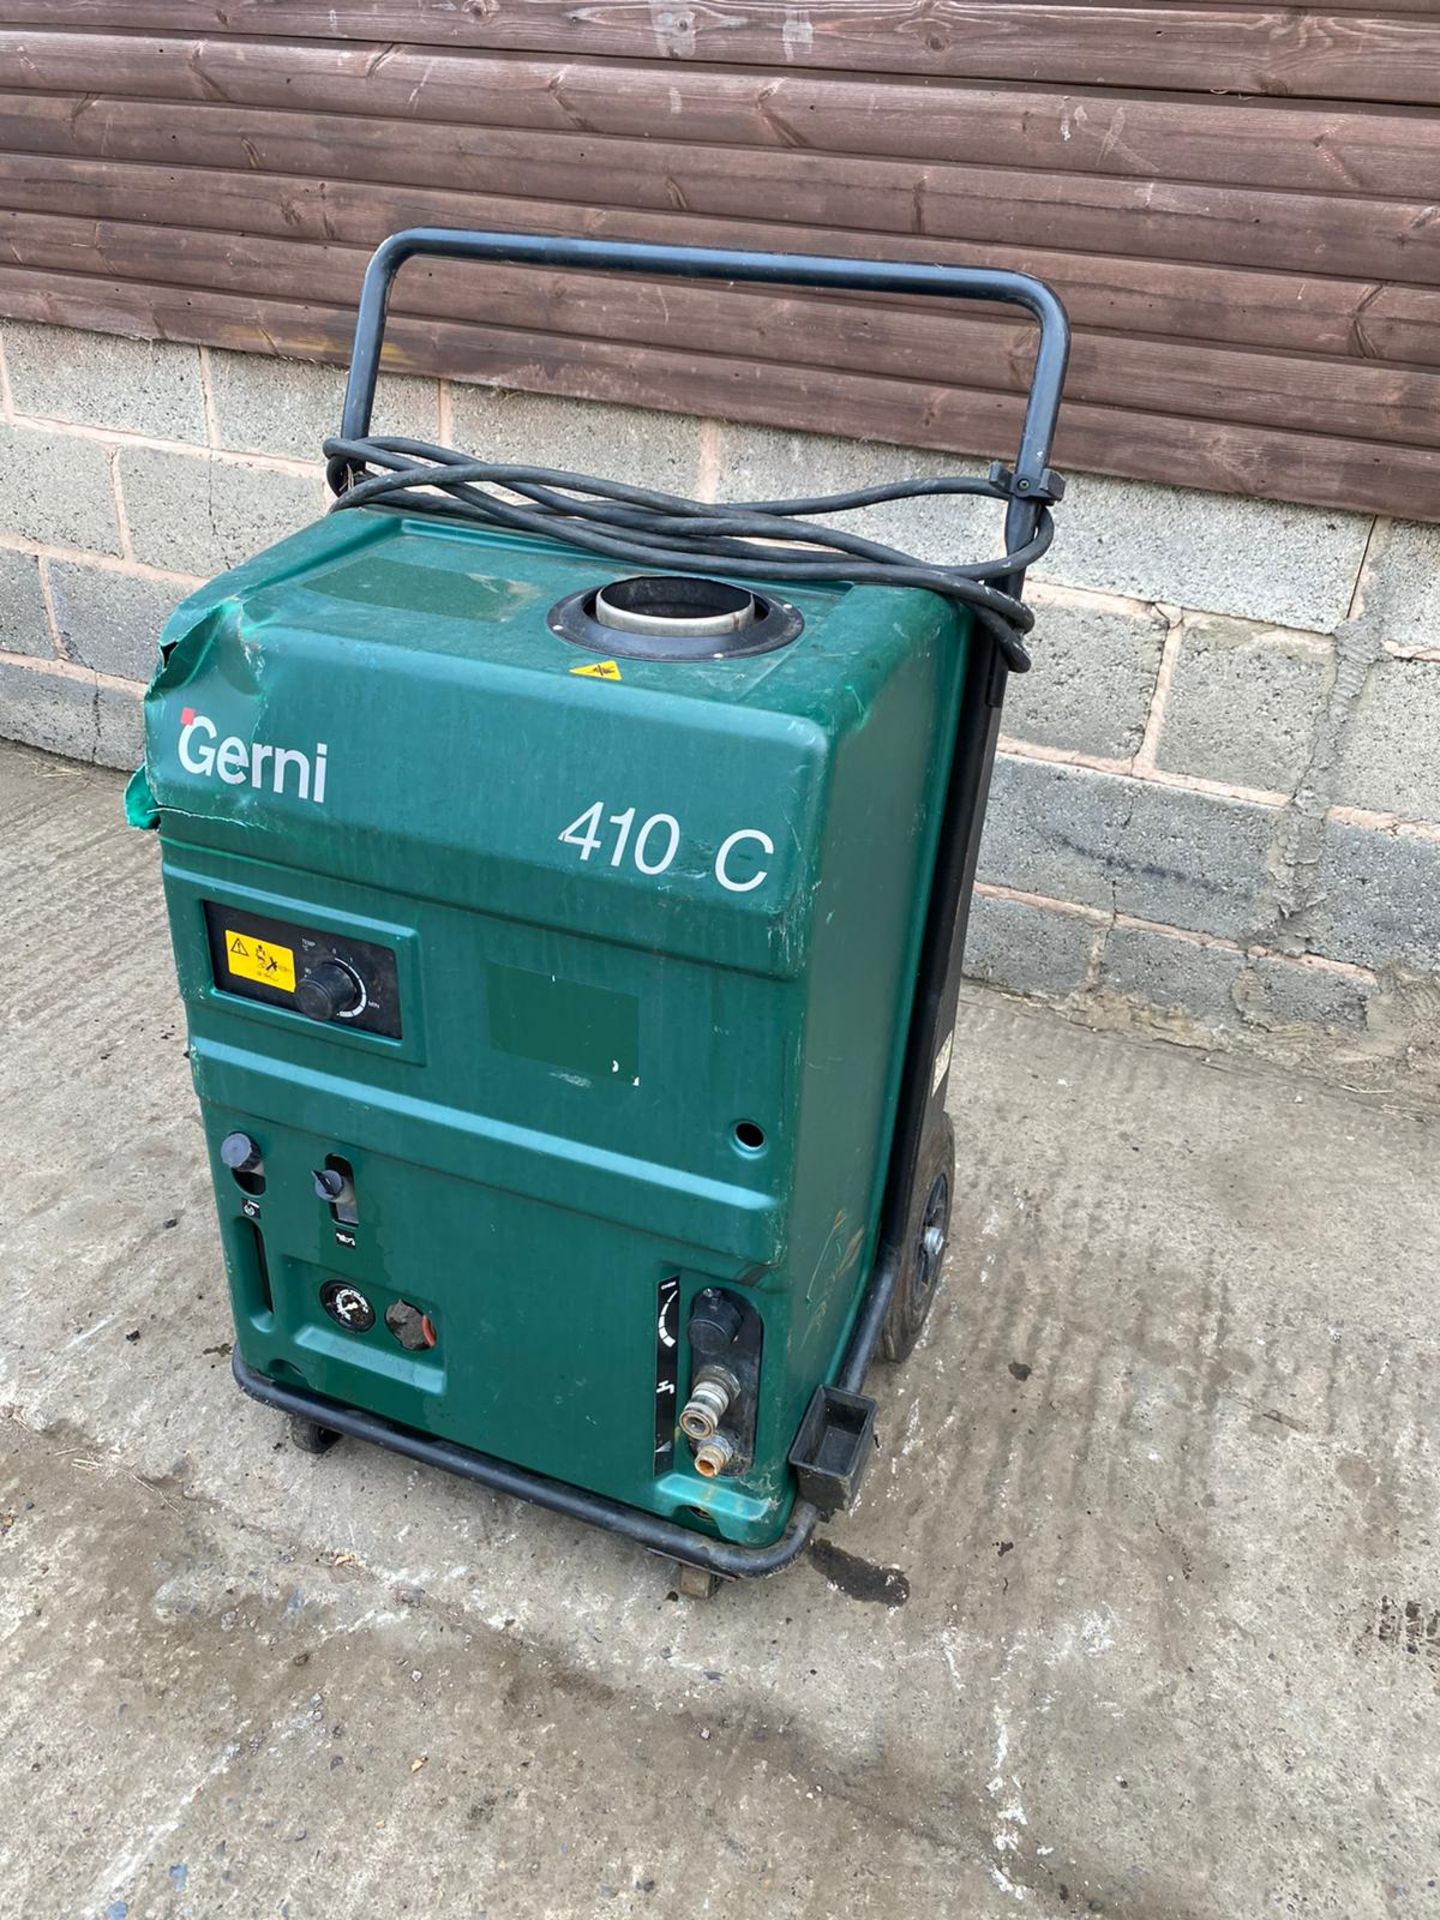 Gerni 410C Diesel Pressure Washer Steam Cleaner - Image 2 of 4